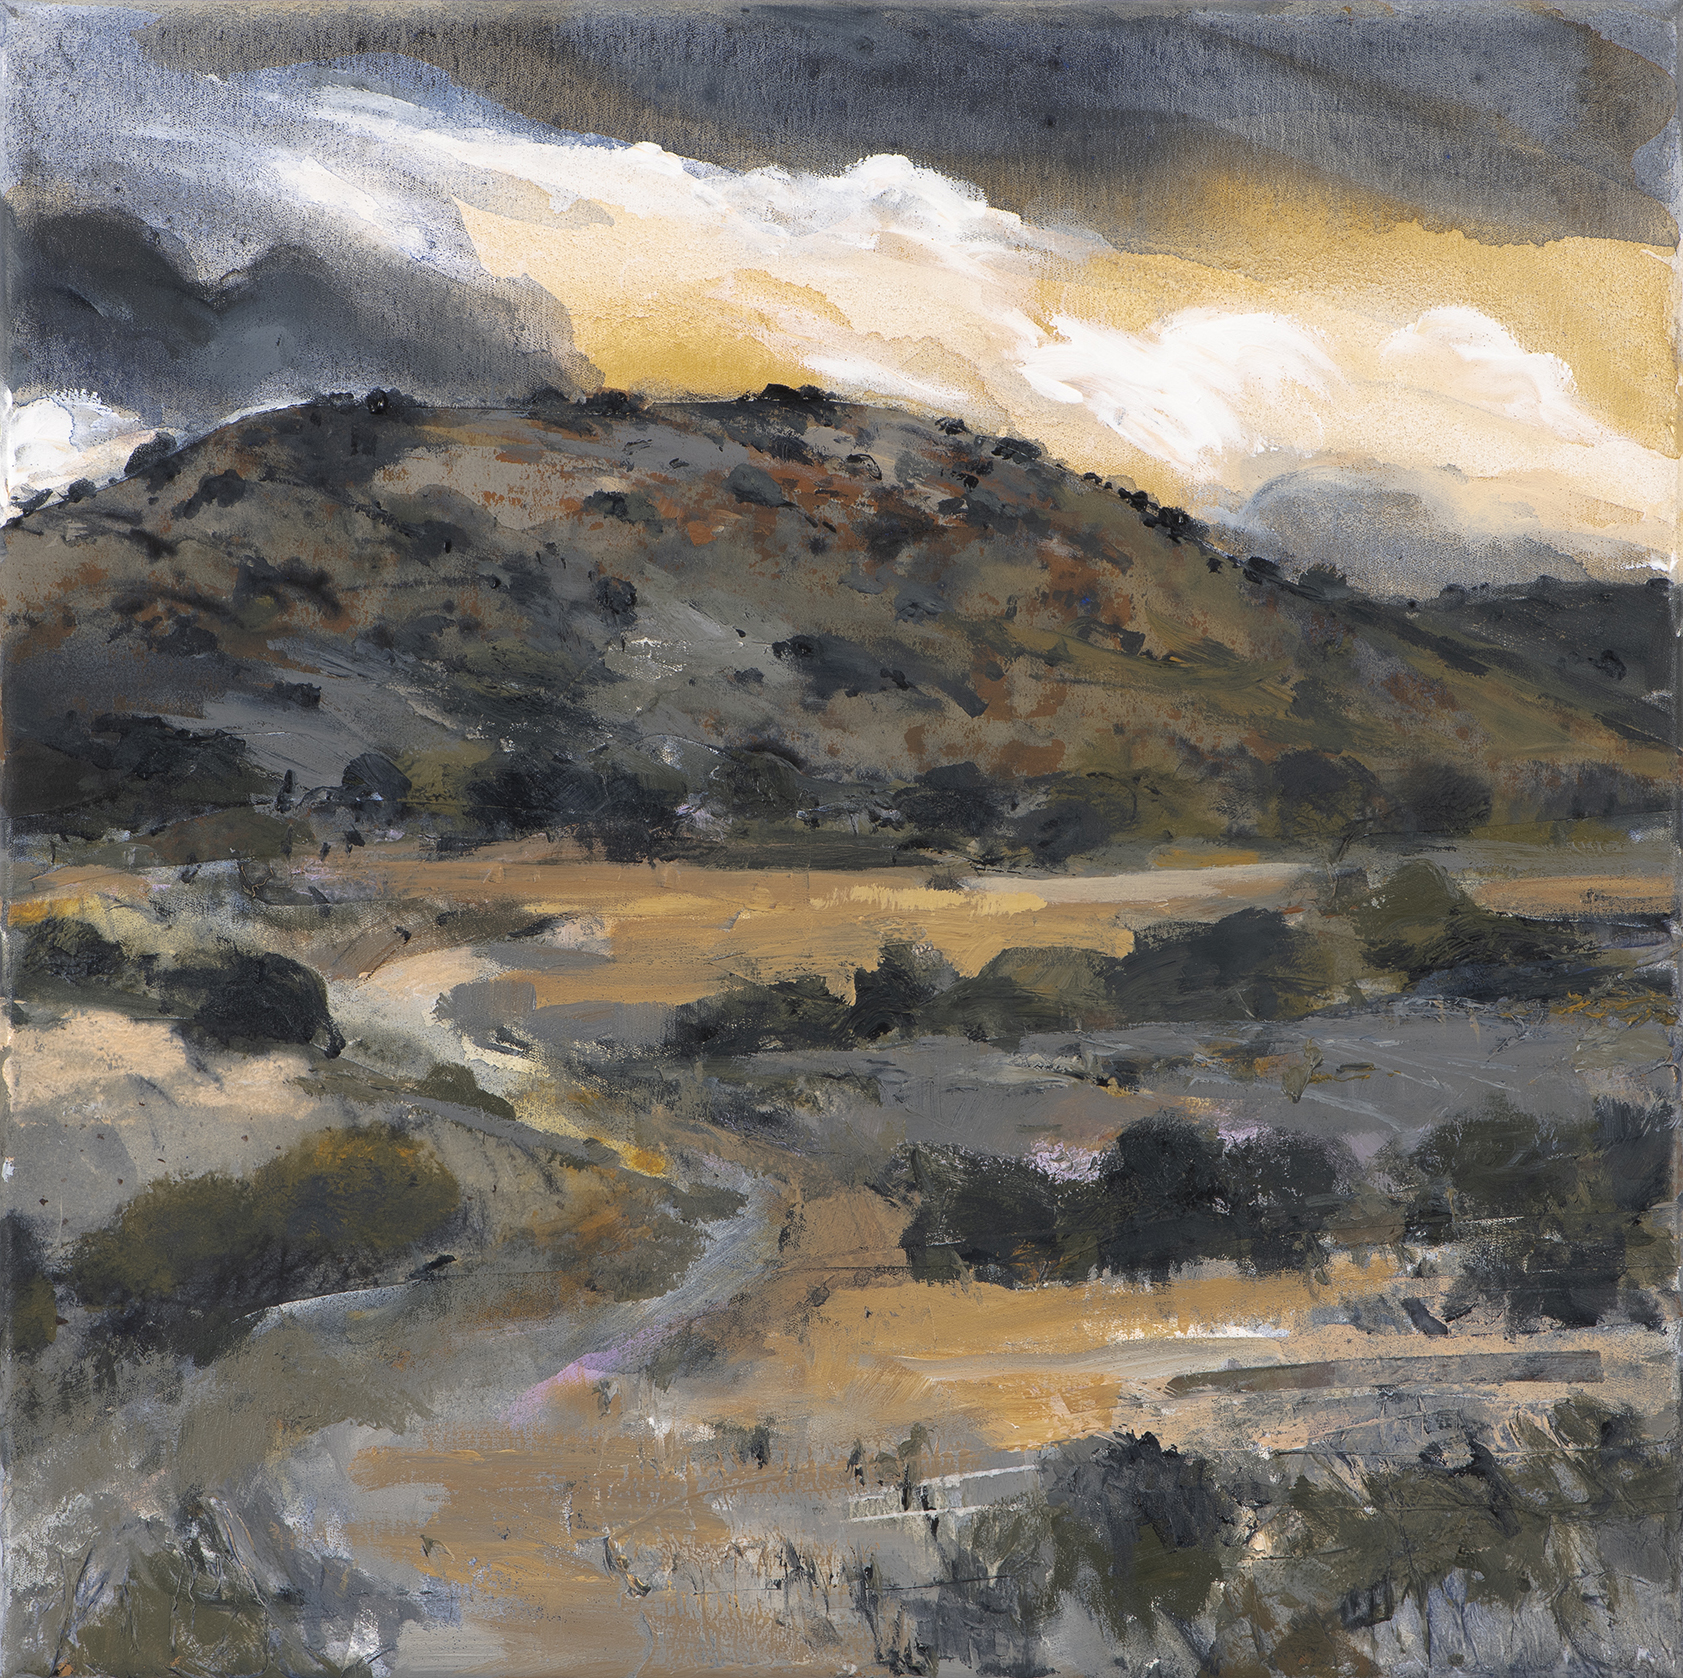 Judith White 'Western Plains (Study) 1' mixed media on canvas 40 x 40cm $2,900